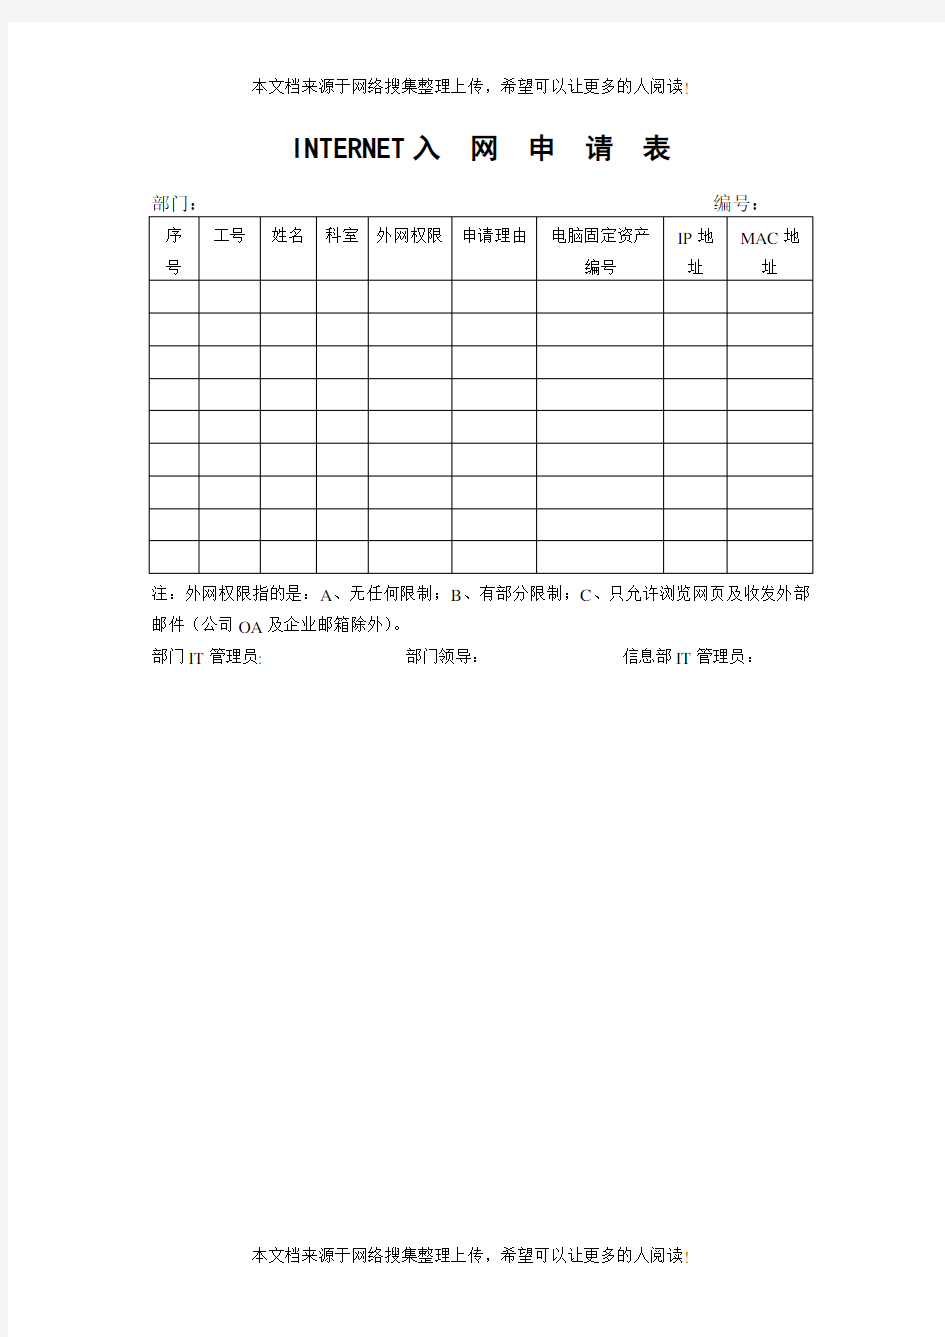 INTERNET入网申请表(表格模板格式)